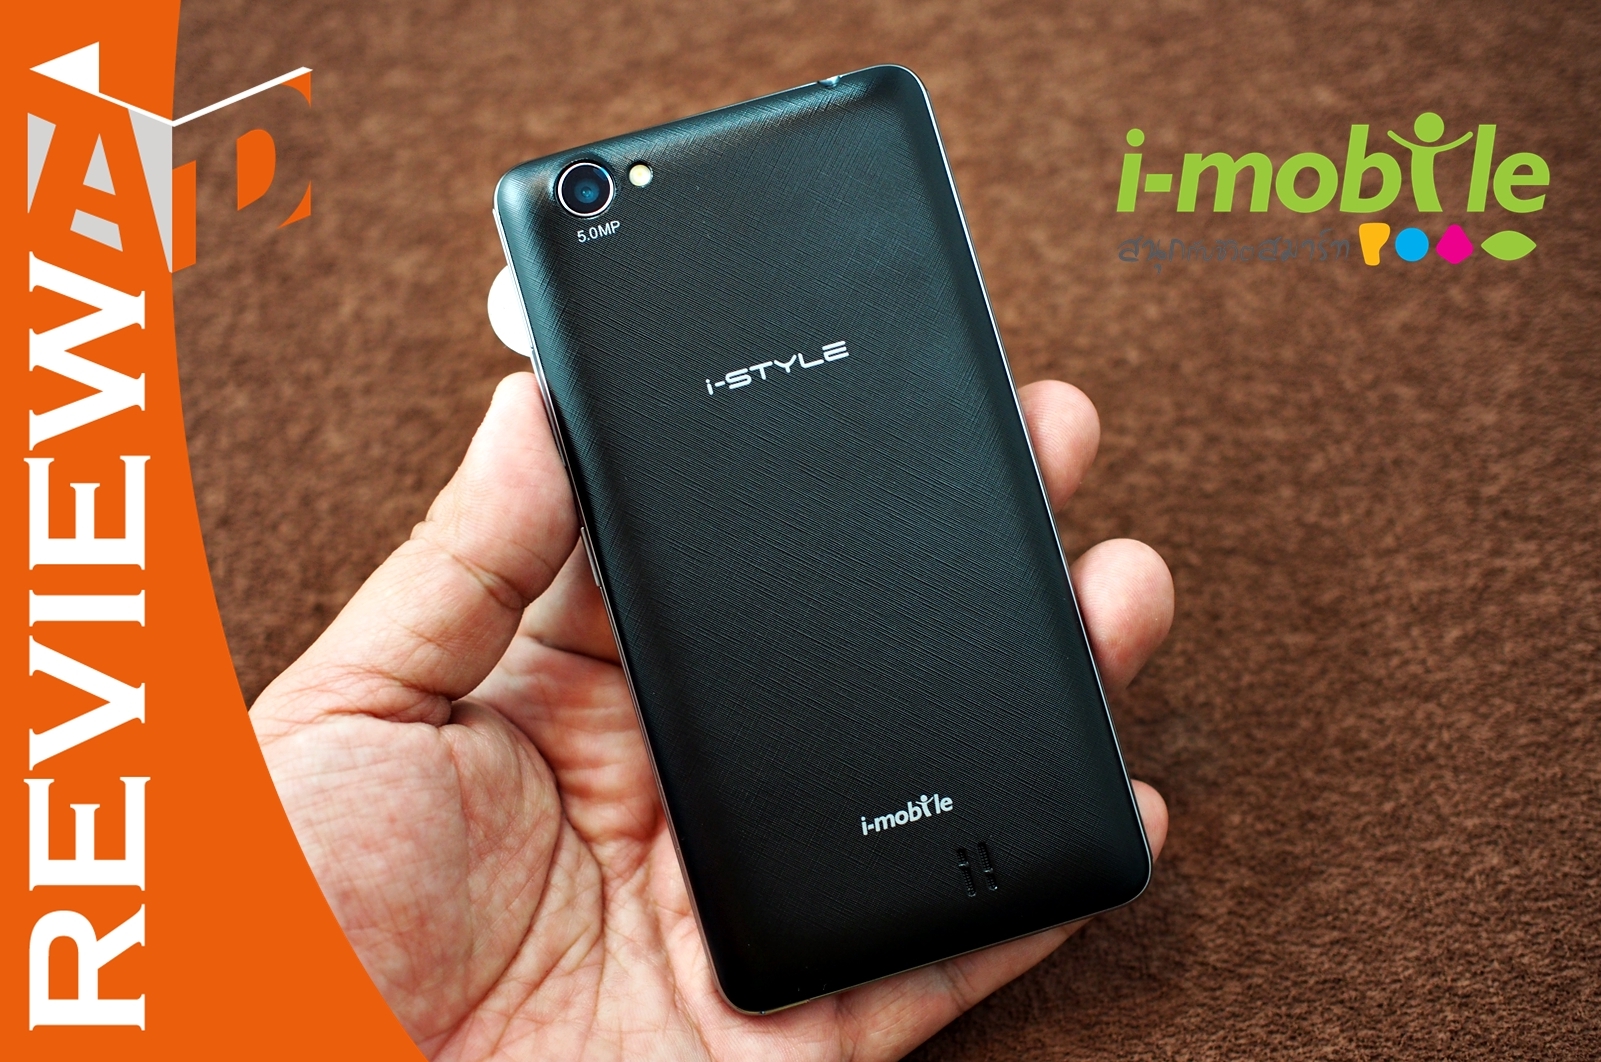 review i Mobile i Style 712 | ‎i-mobile | รีวิว i-Mobile i-Style 712 สมาร์ทโฟนชั้นประหยัดราคาเบาๆ กับสเปคระดับเริ่มต้น บน Android 6.0